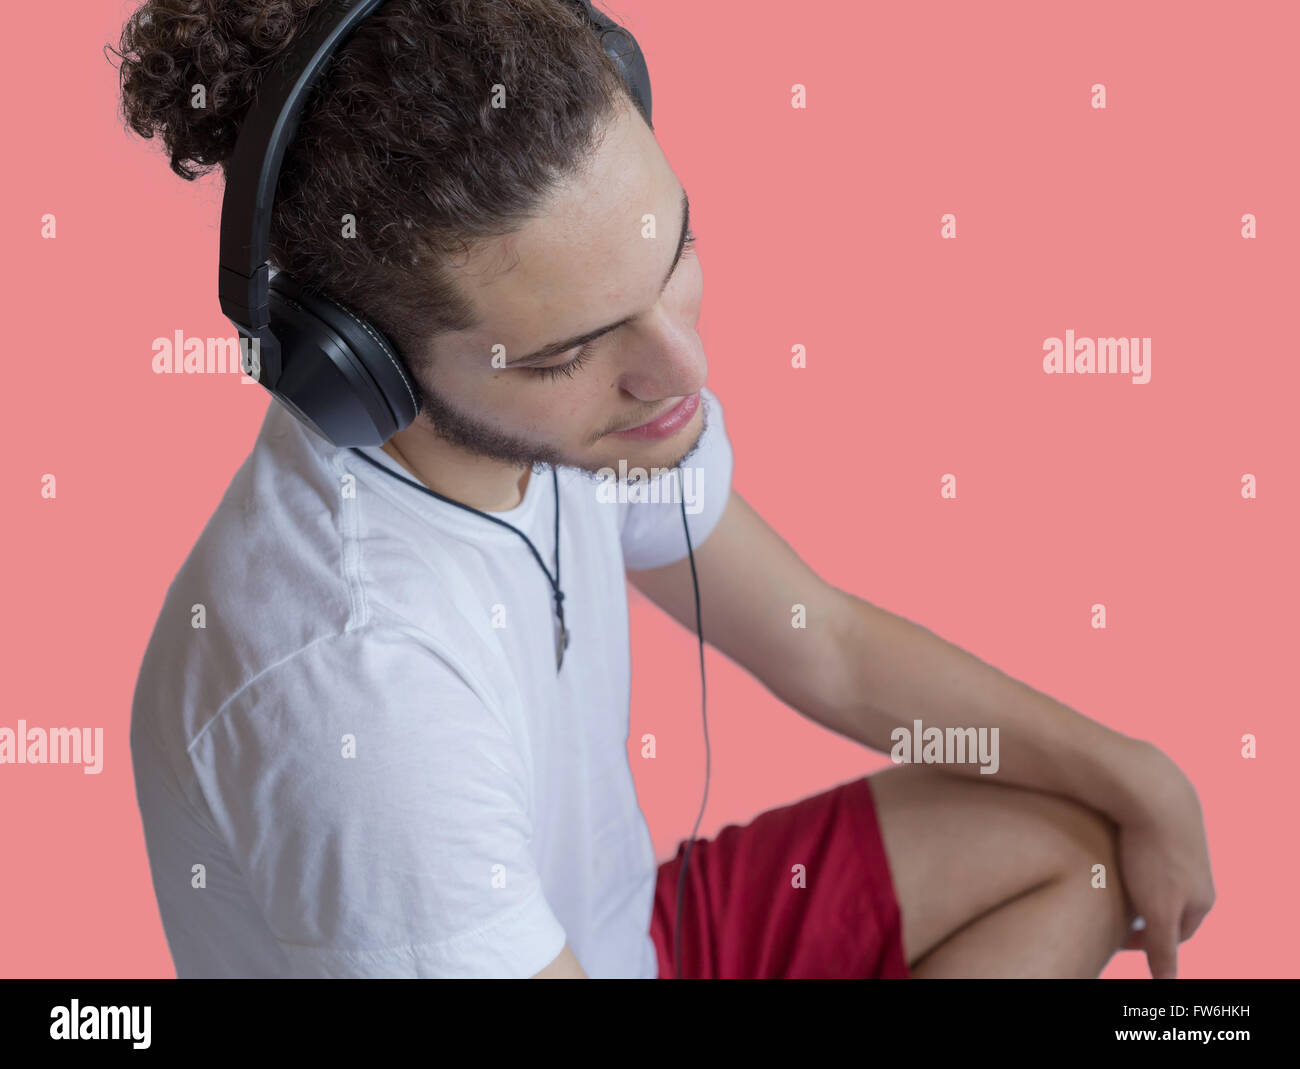 Boy listening to music. Stock Photo